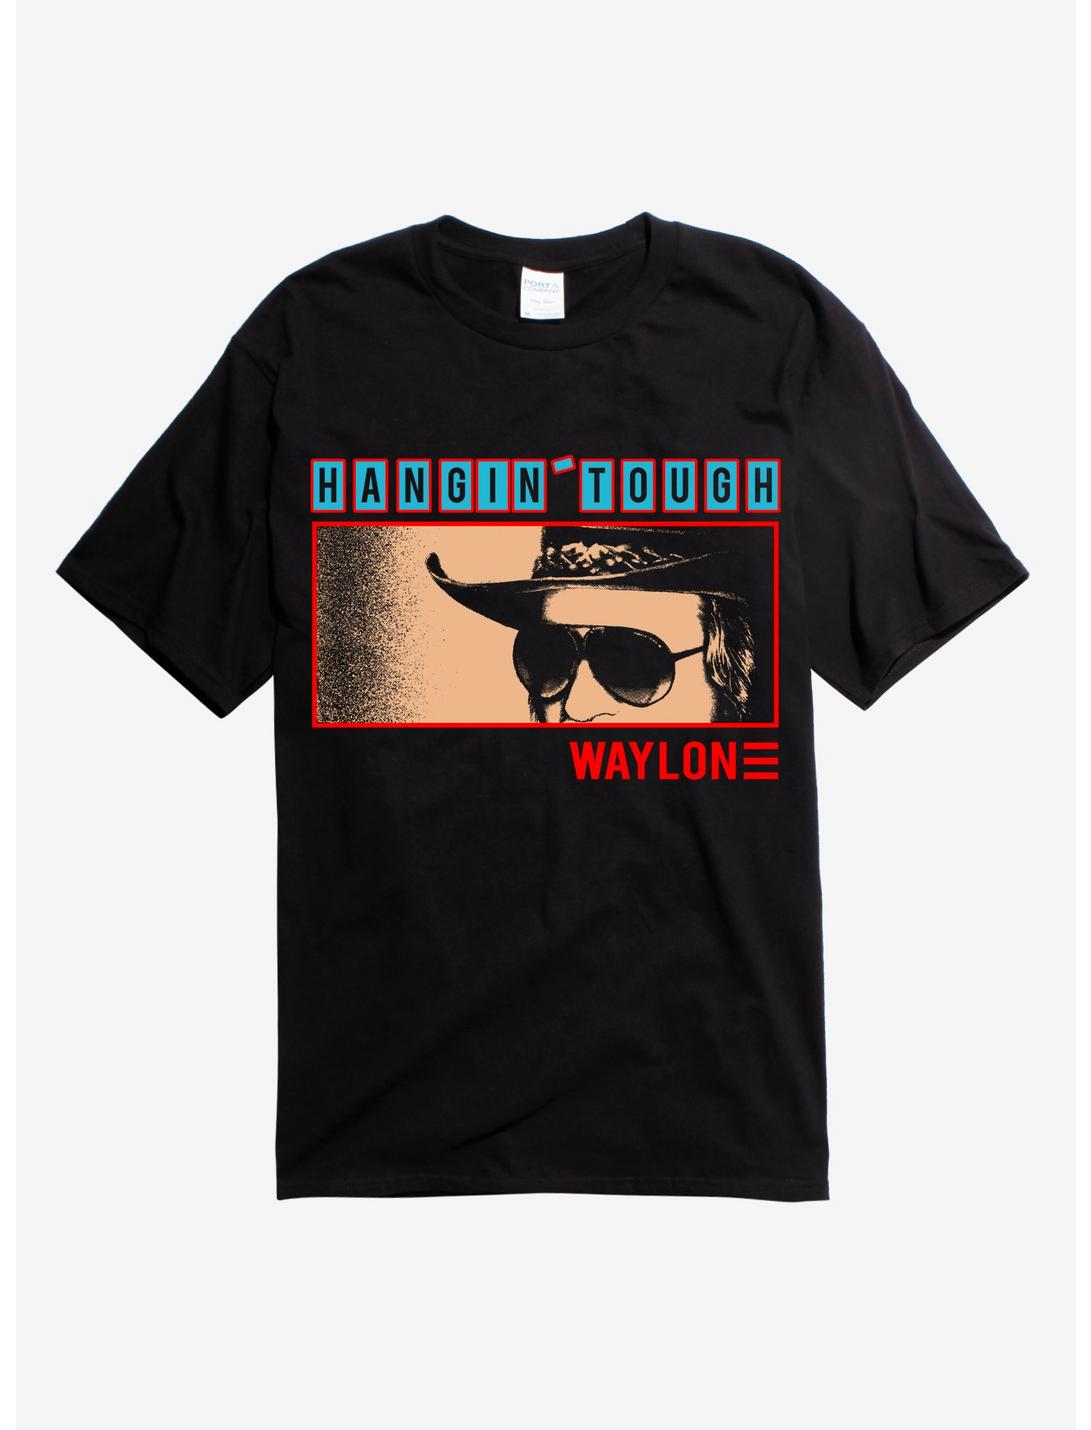 Waylon Jennings Hangin Tough T-Shirt, BLACK, hi-res